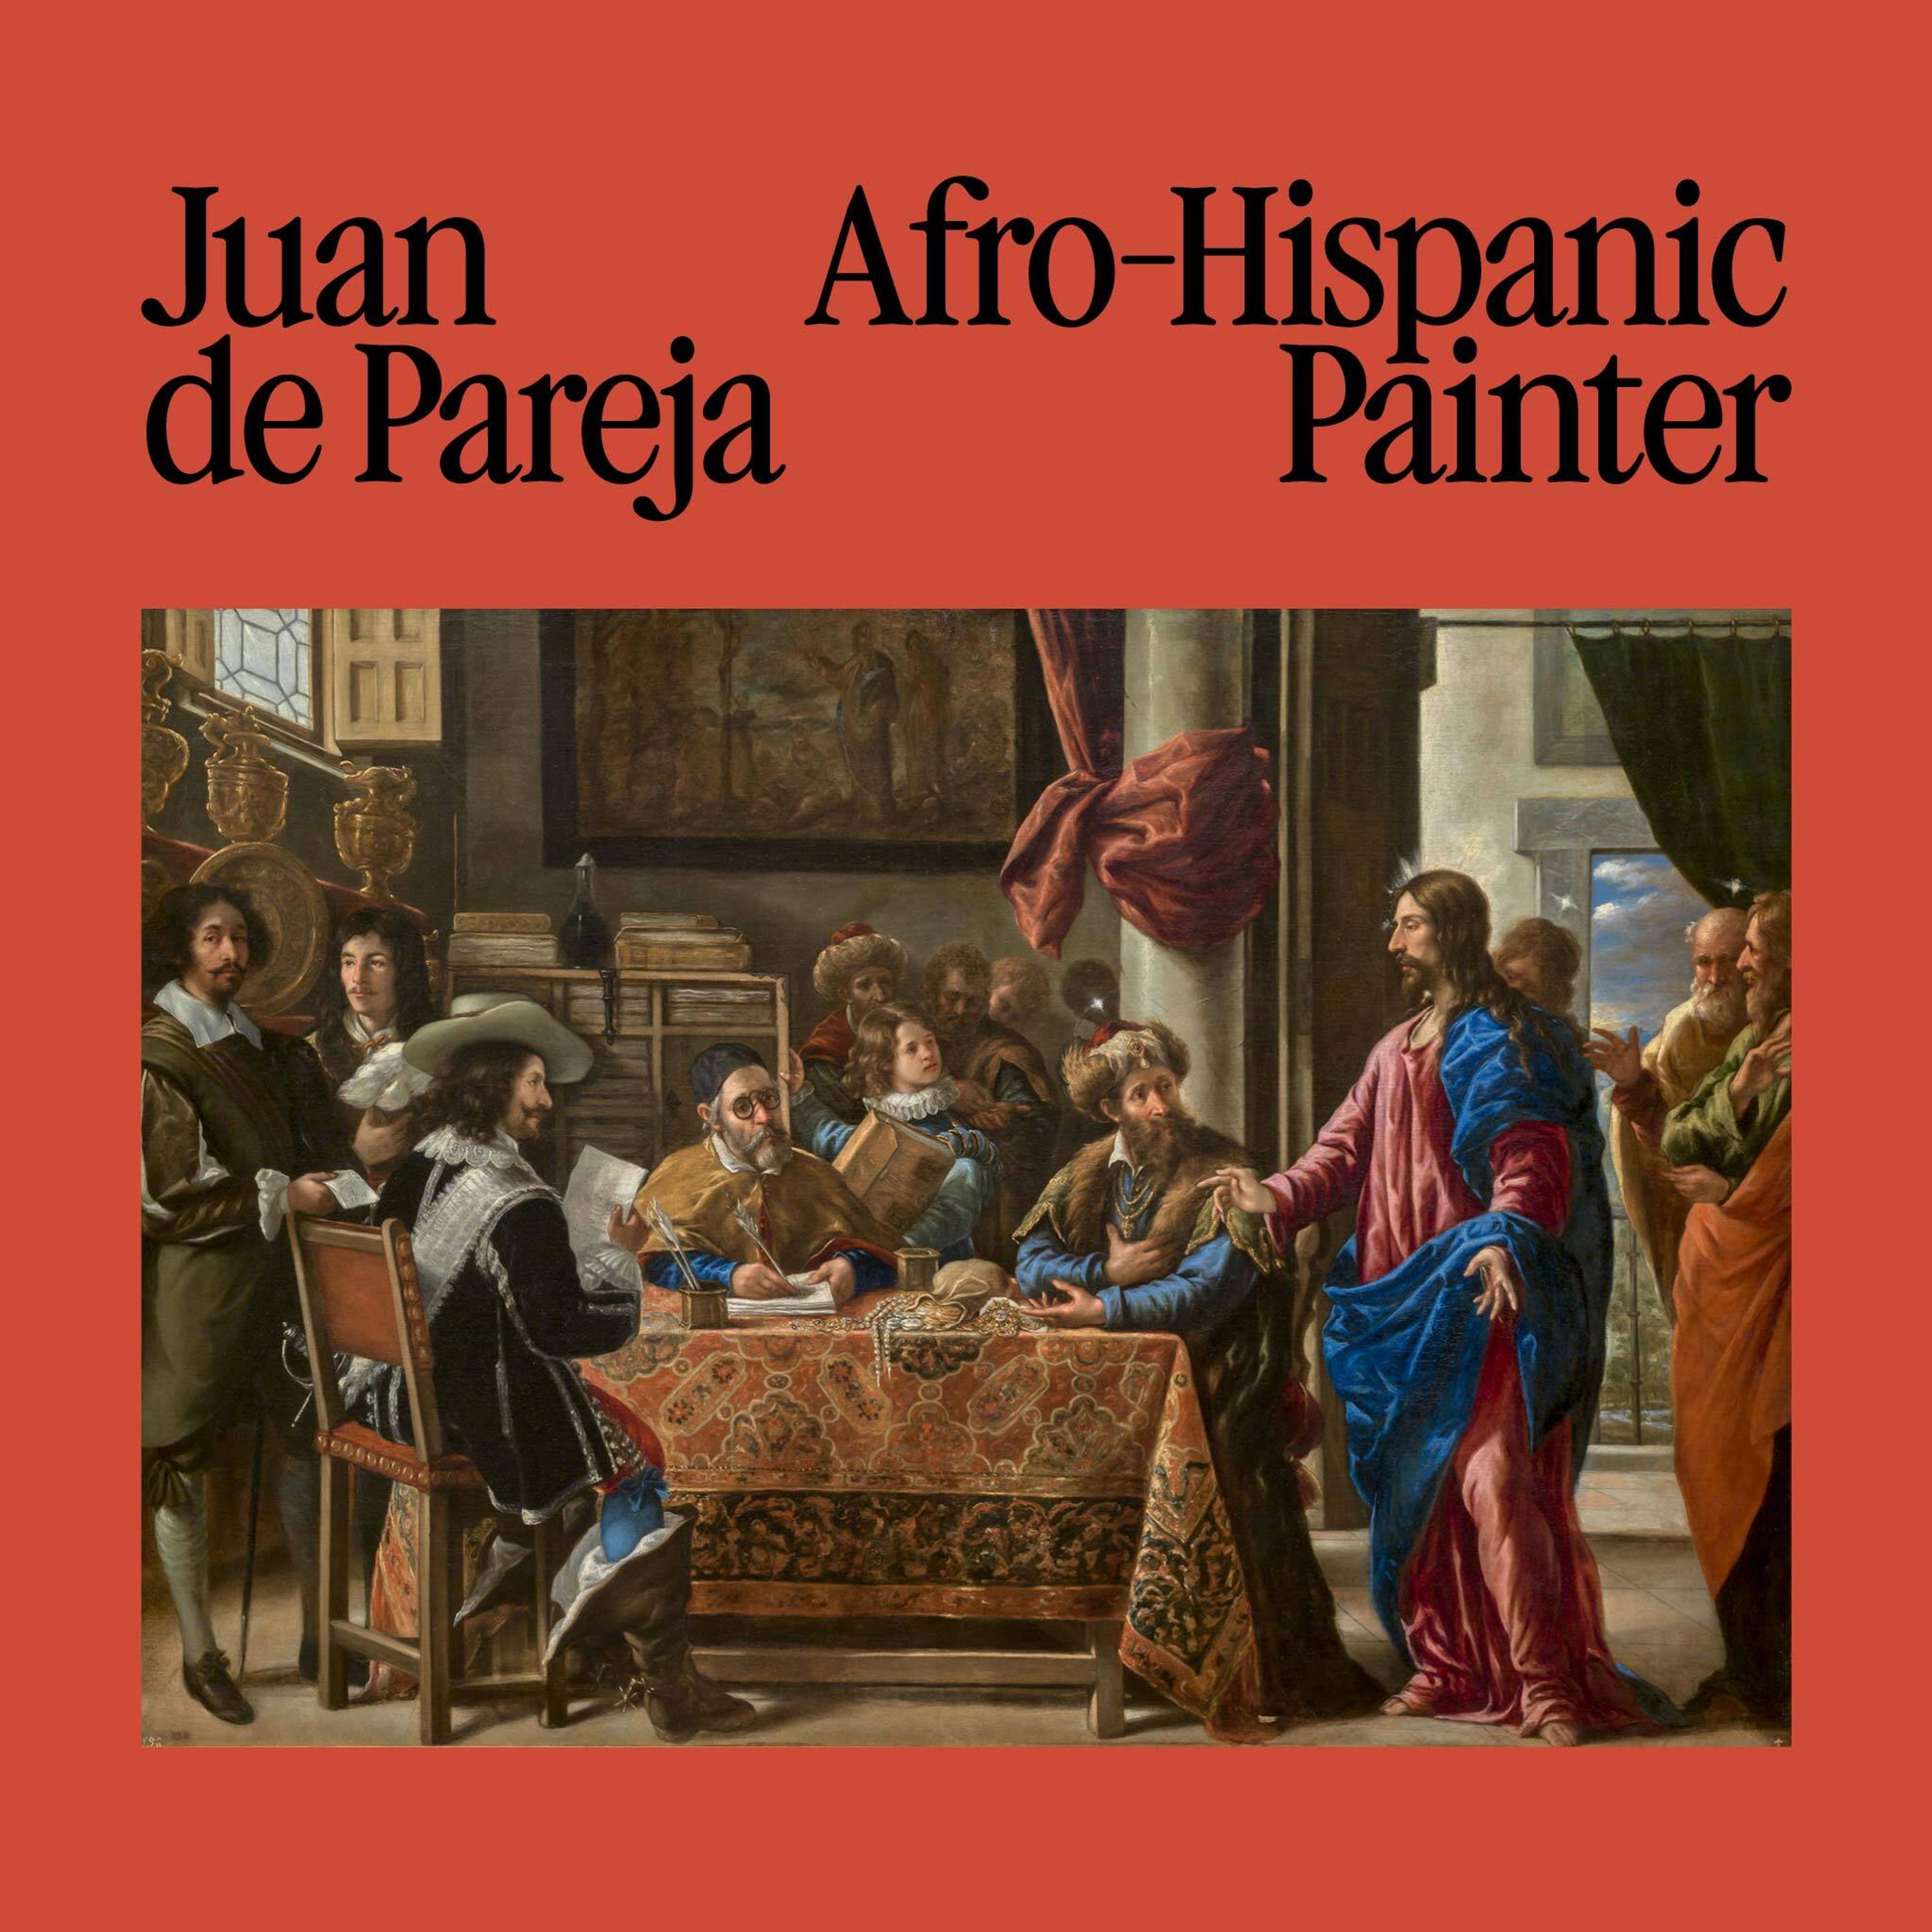 Promotional graphic for "Juan de Pareja: Afro-Hispanic Painter"